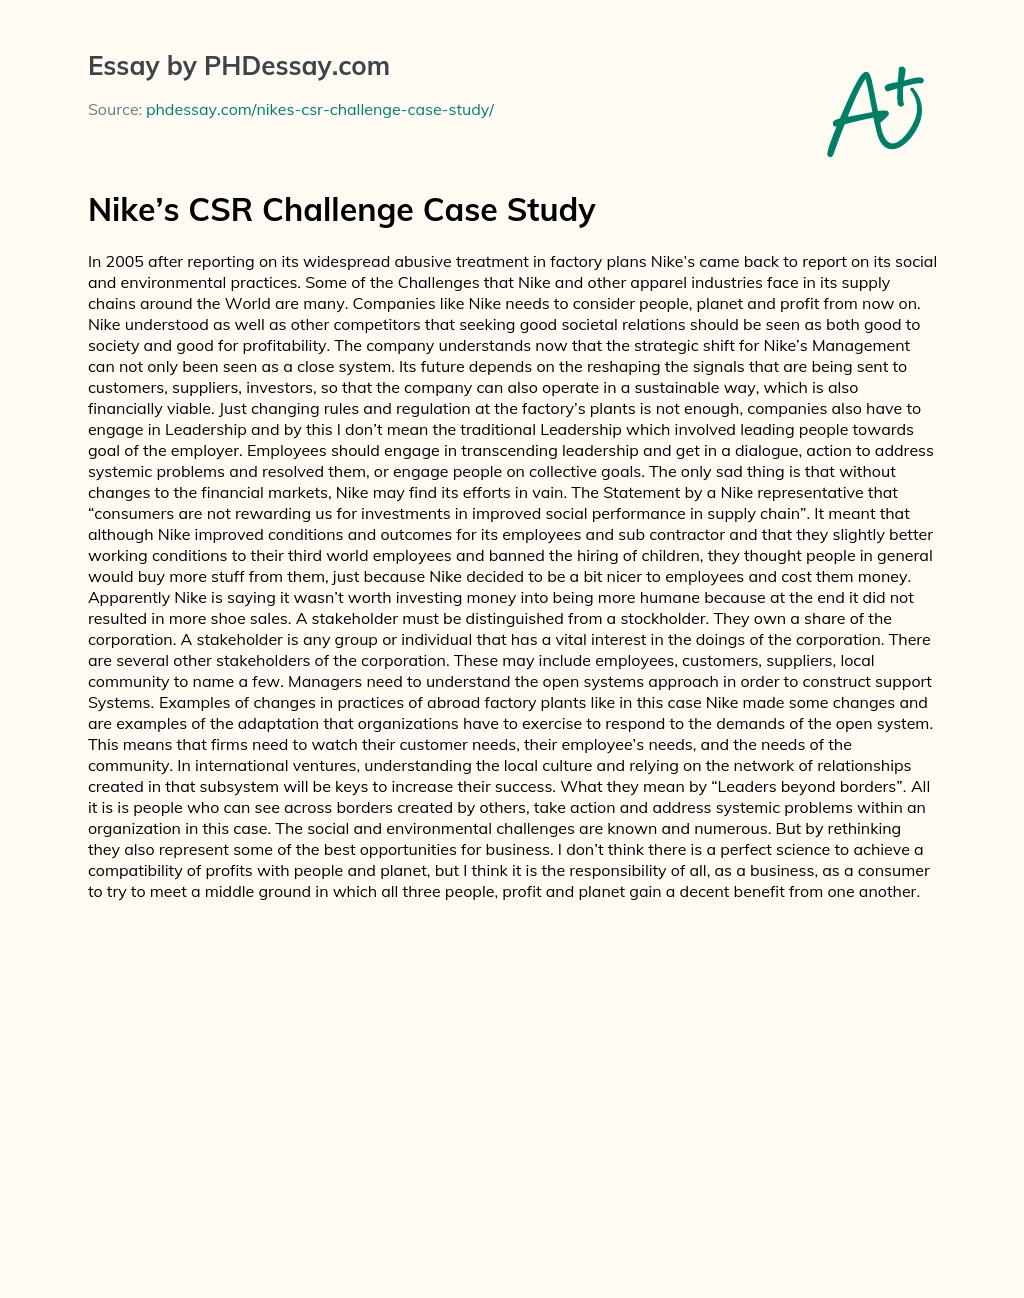 Nike’s CSR Challenge Case Study essay